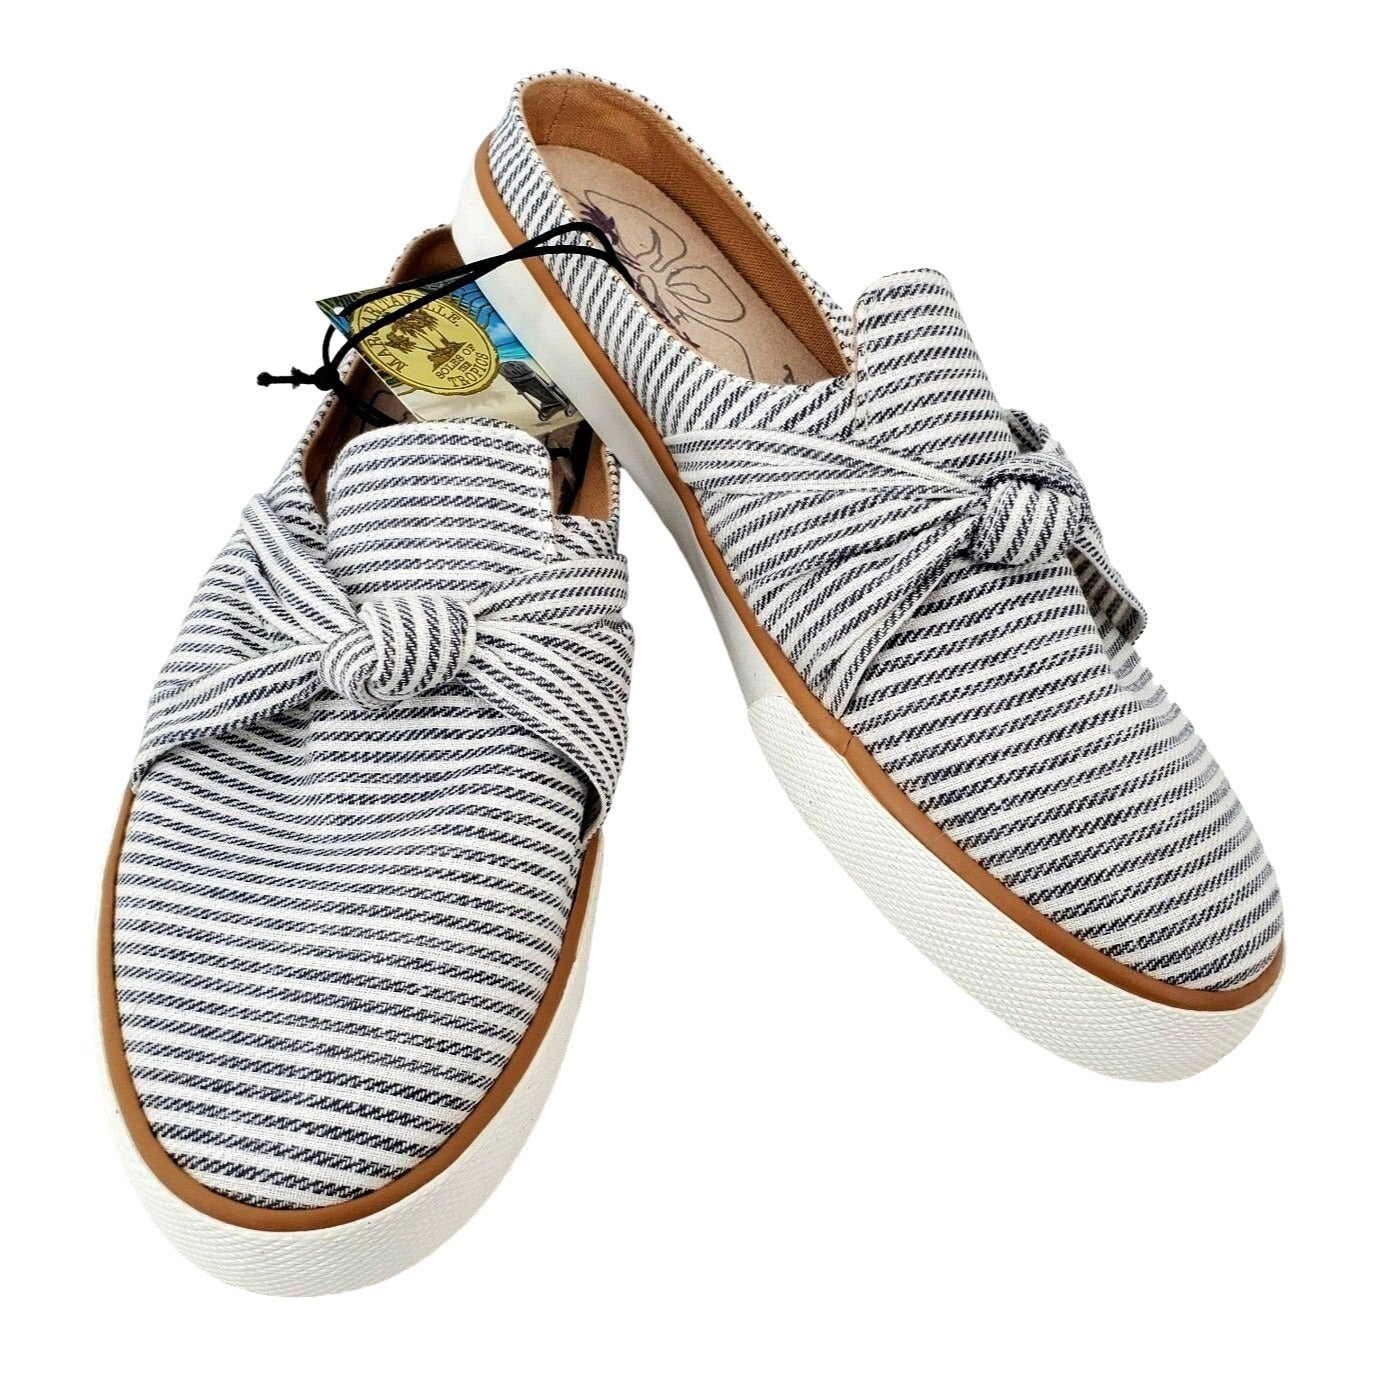 MARGARITAVILLE Mule Sneaker Woman's Slip-on Nautical Knot Sandal Shoe